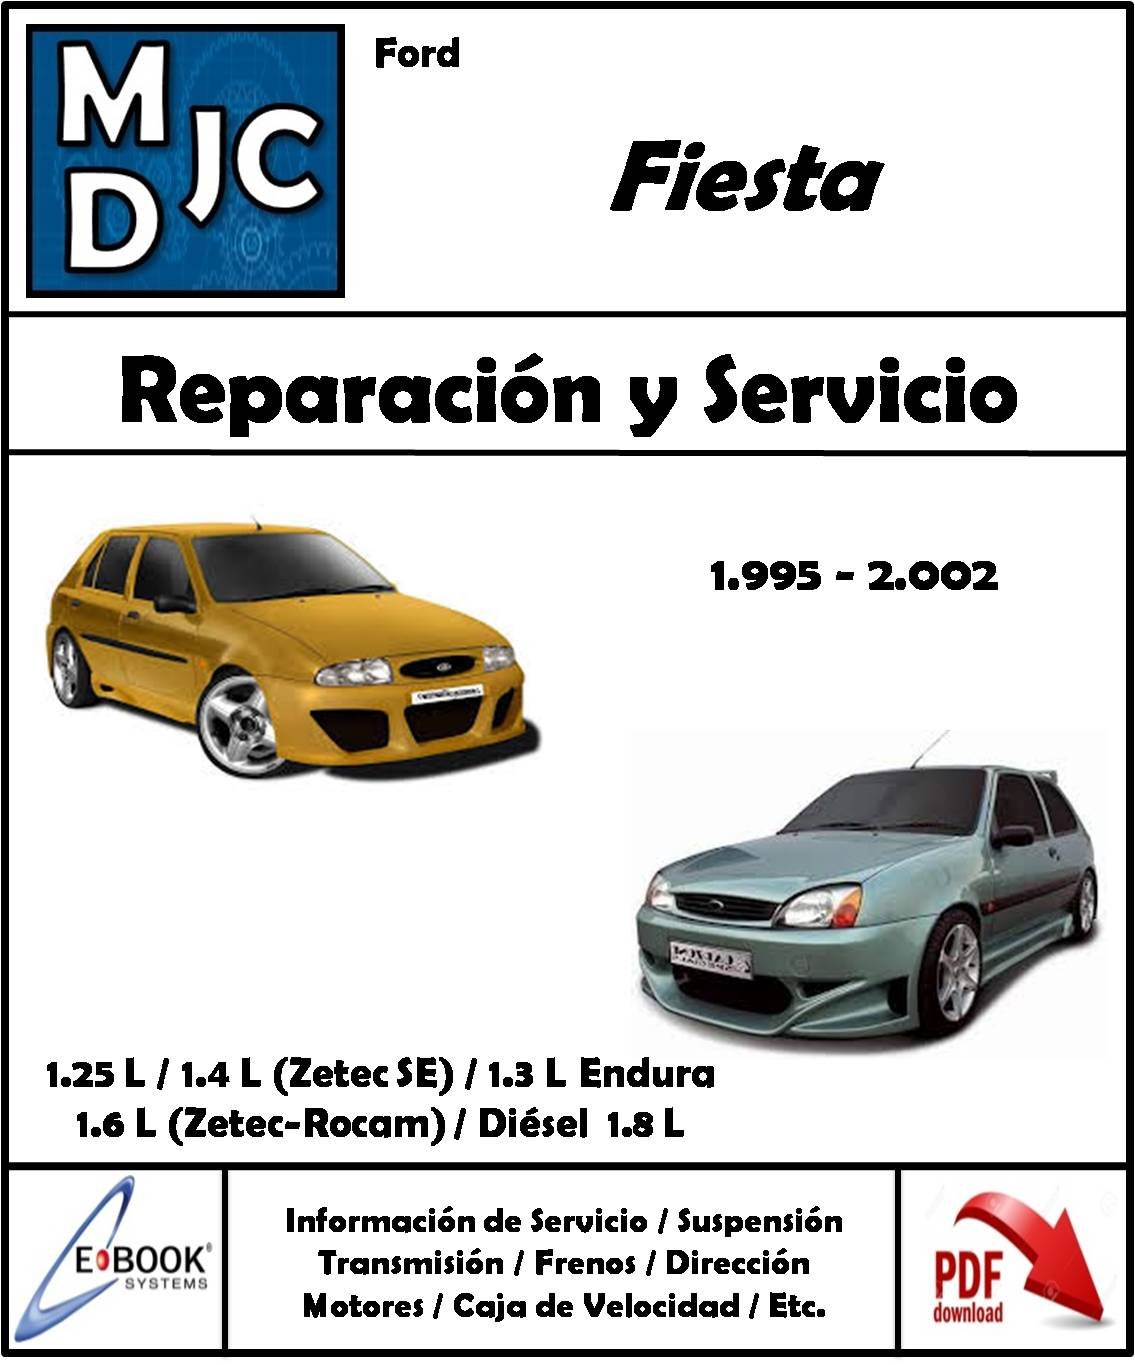 Ford Fiesta 1995-2002